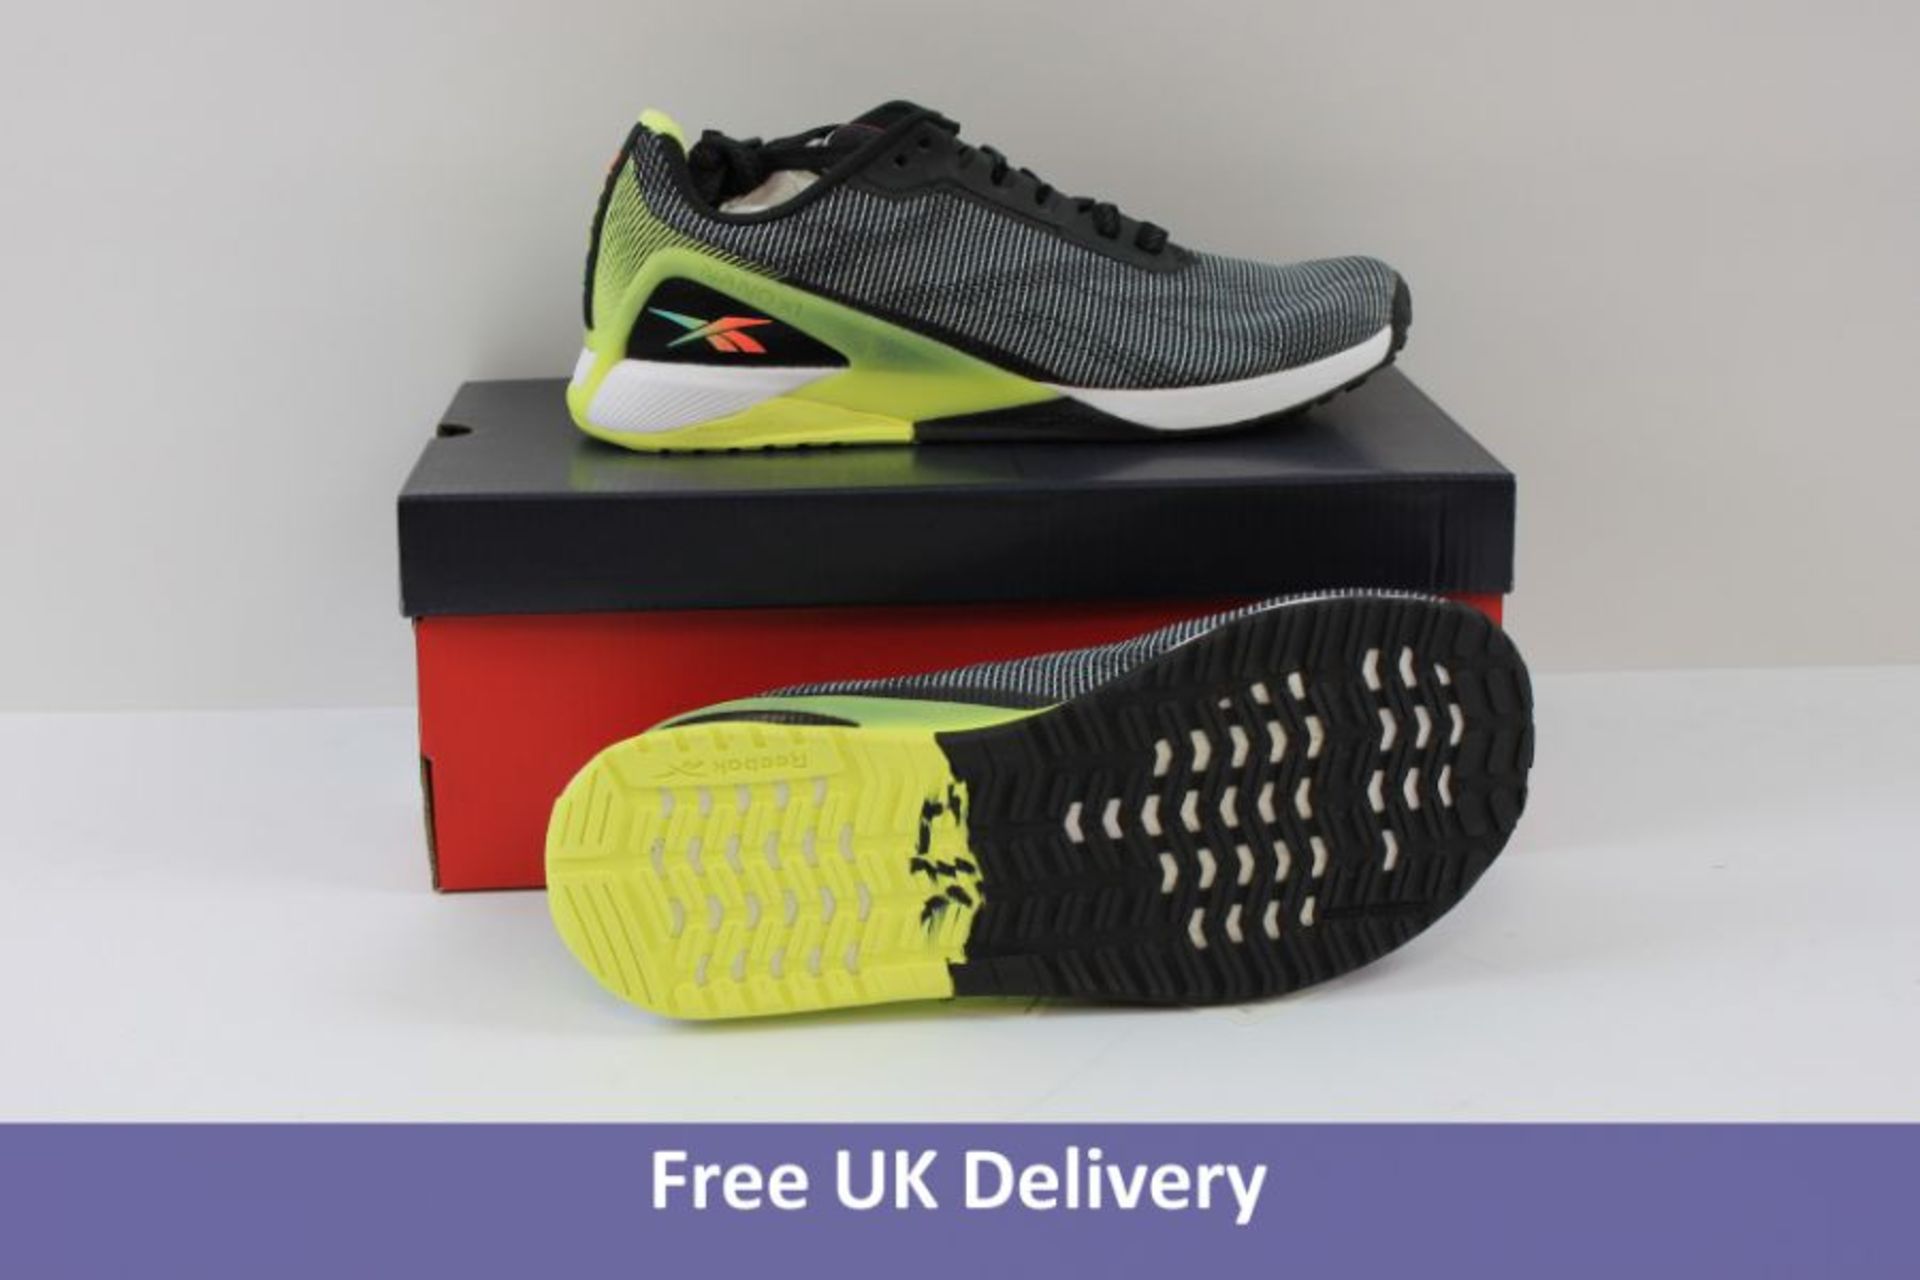 Reebok Women's Nano X1 Grit Track Shoes, Grey and Yellow, UK 5.5